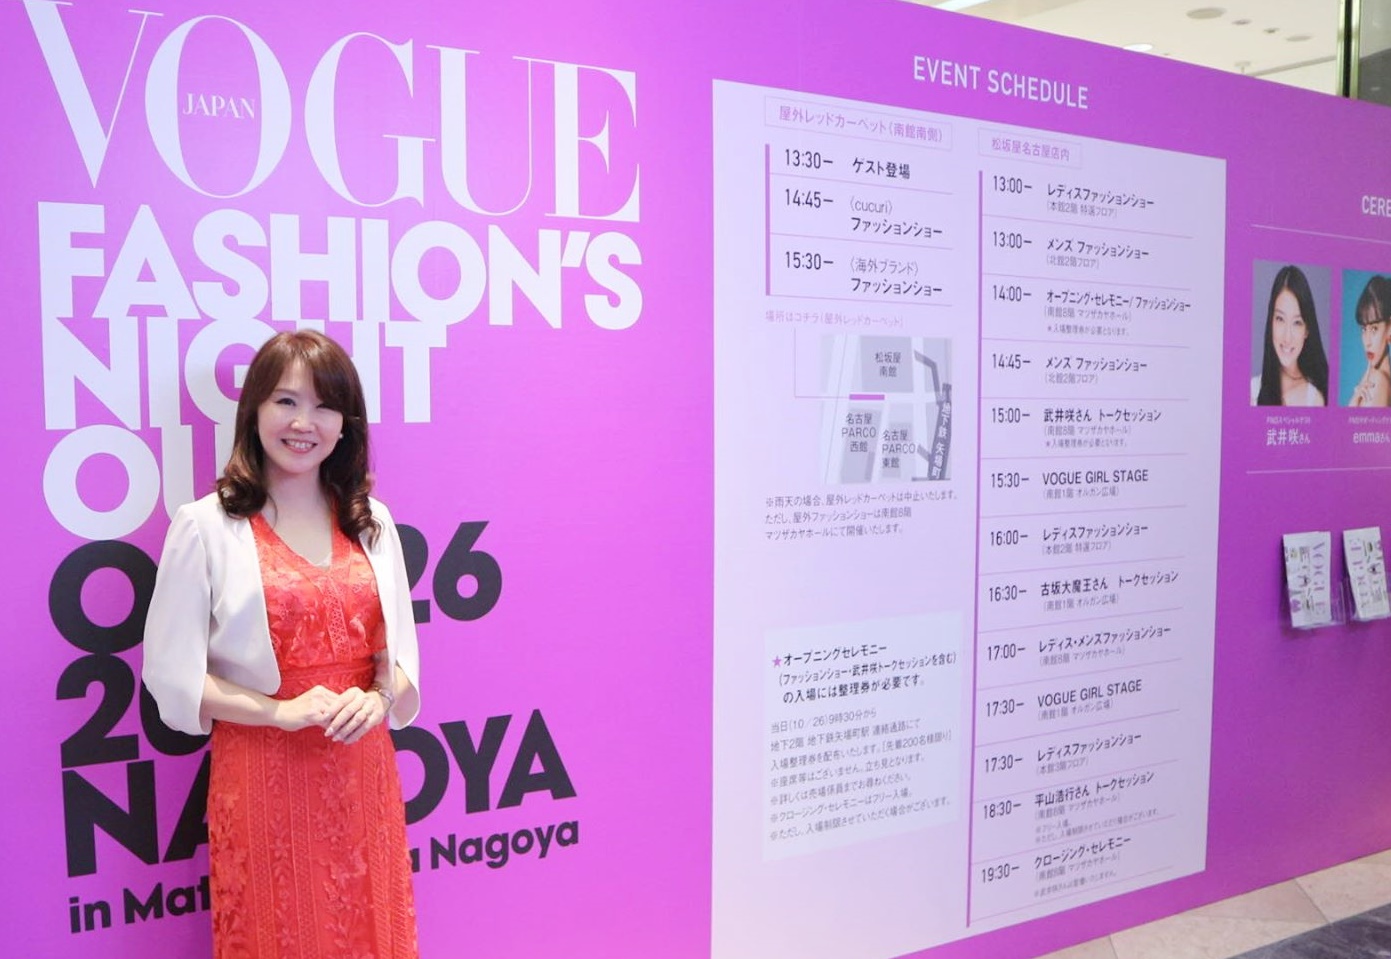 Vogue Japan Fashons Night Out19 Nagoya 名古屋松坂屋様でパーソナルカラー診断イベントを担当いたしました パーソナルカラー診断 メイクアップレッスン 骨格診断 パーソナルカラーアナリスト養成講座 イメージコンサルタント養成講座なら東京 青山 千葉の